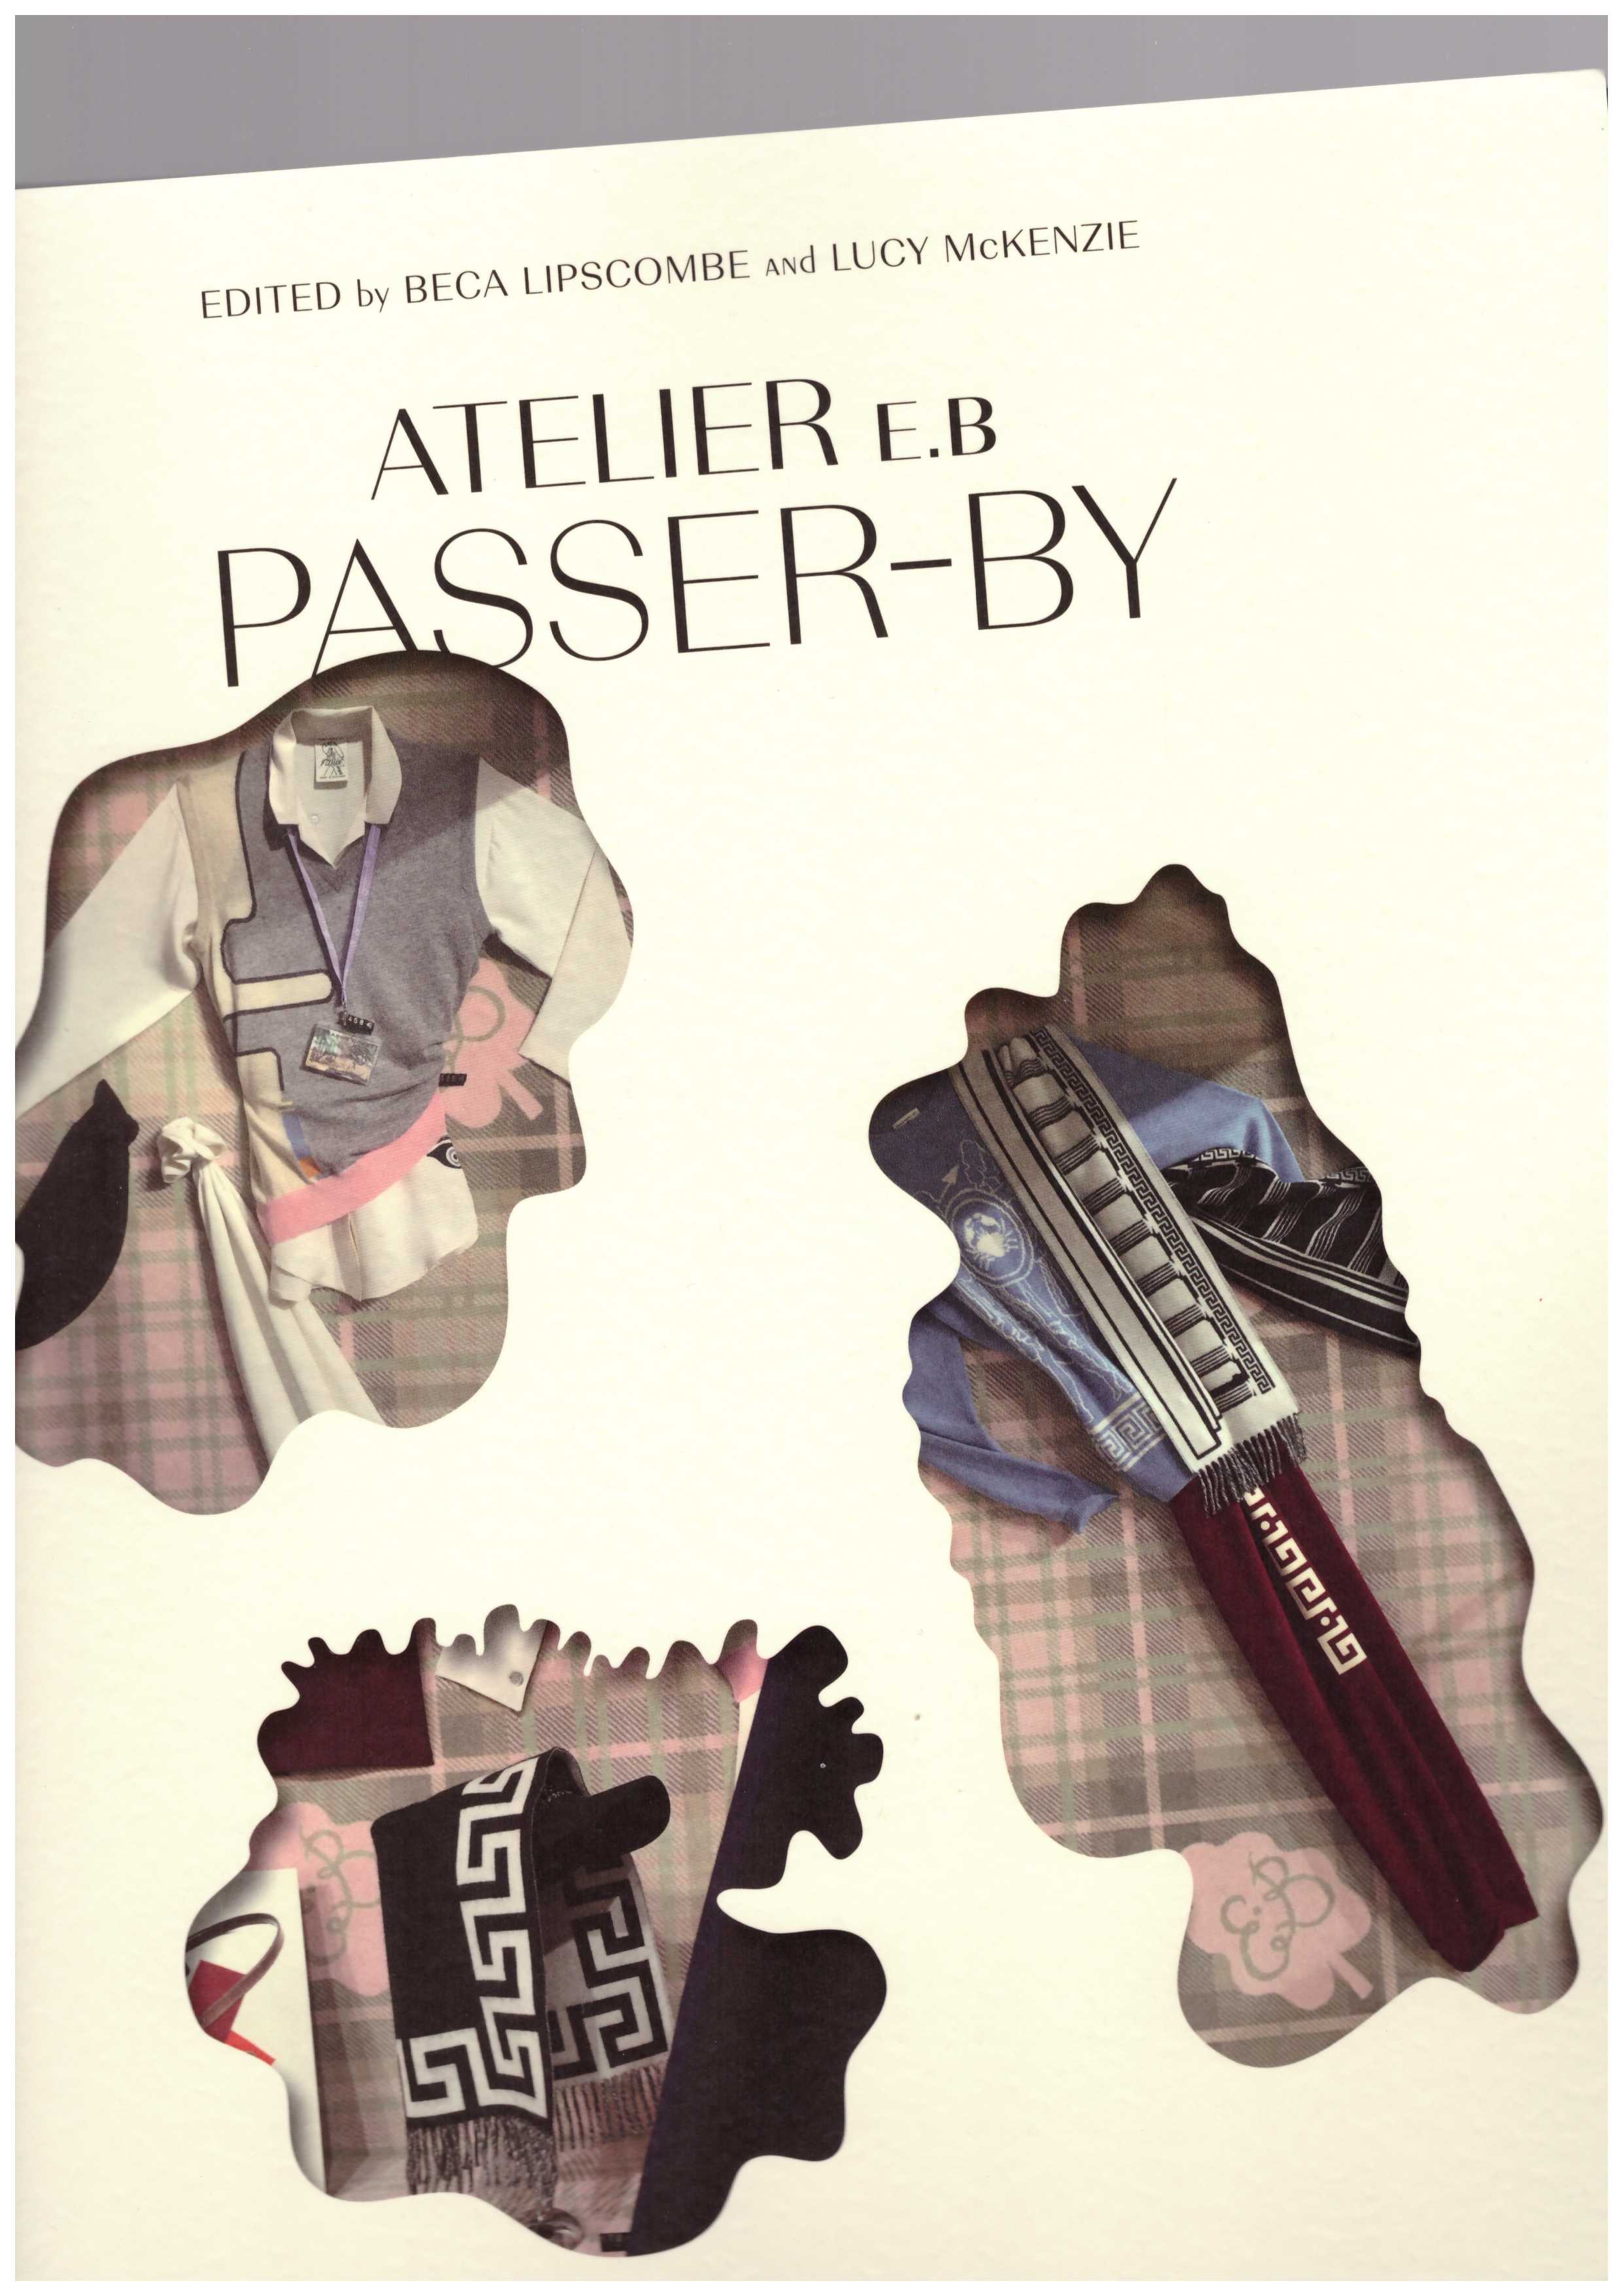 ATELIER E.B. - Atelier E.B.: Passer-by